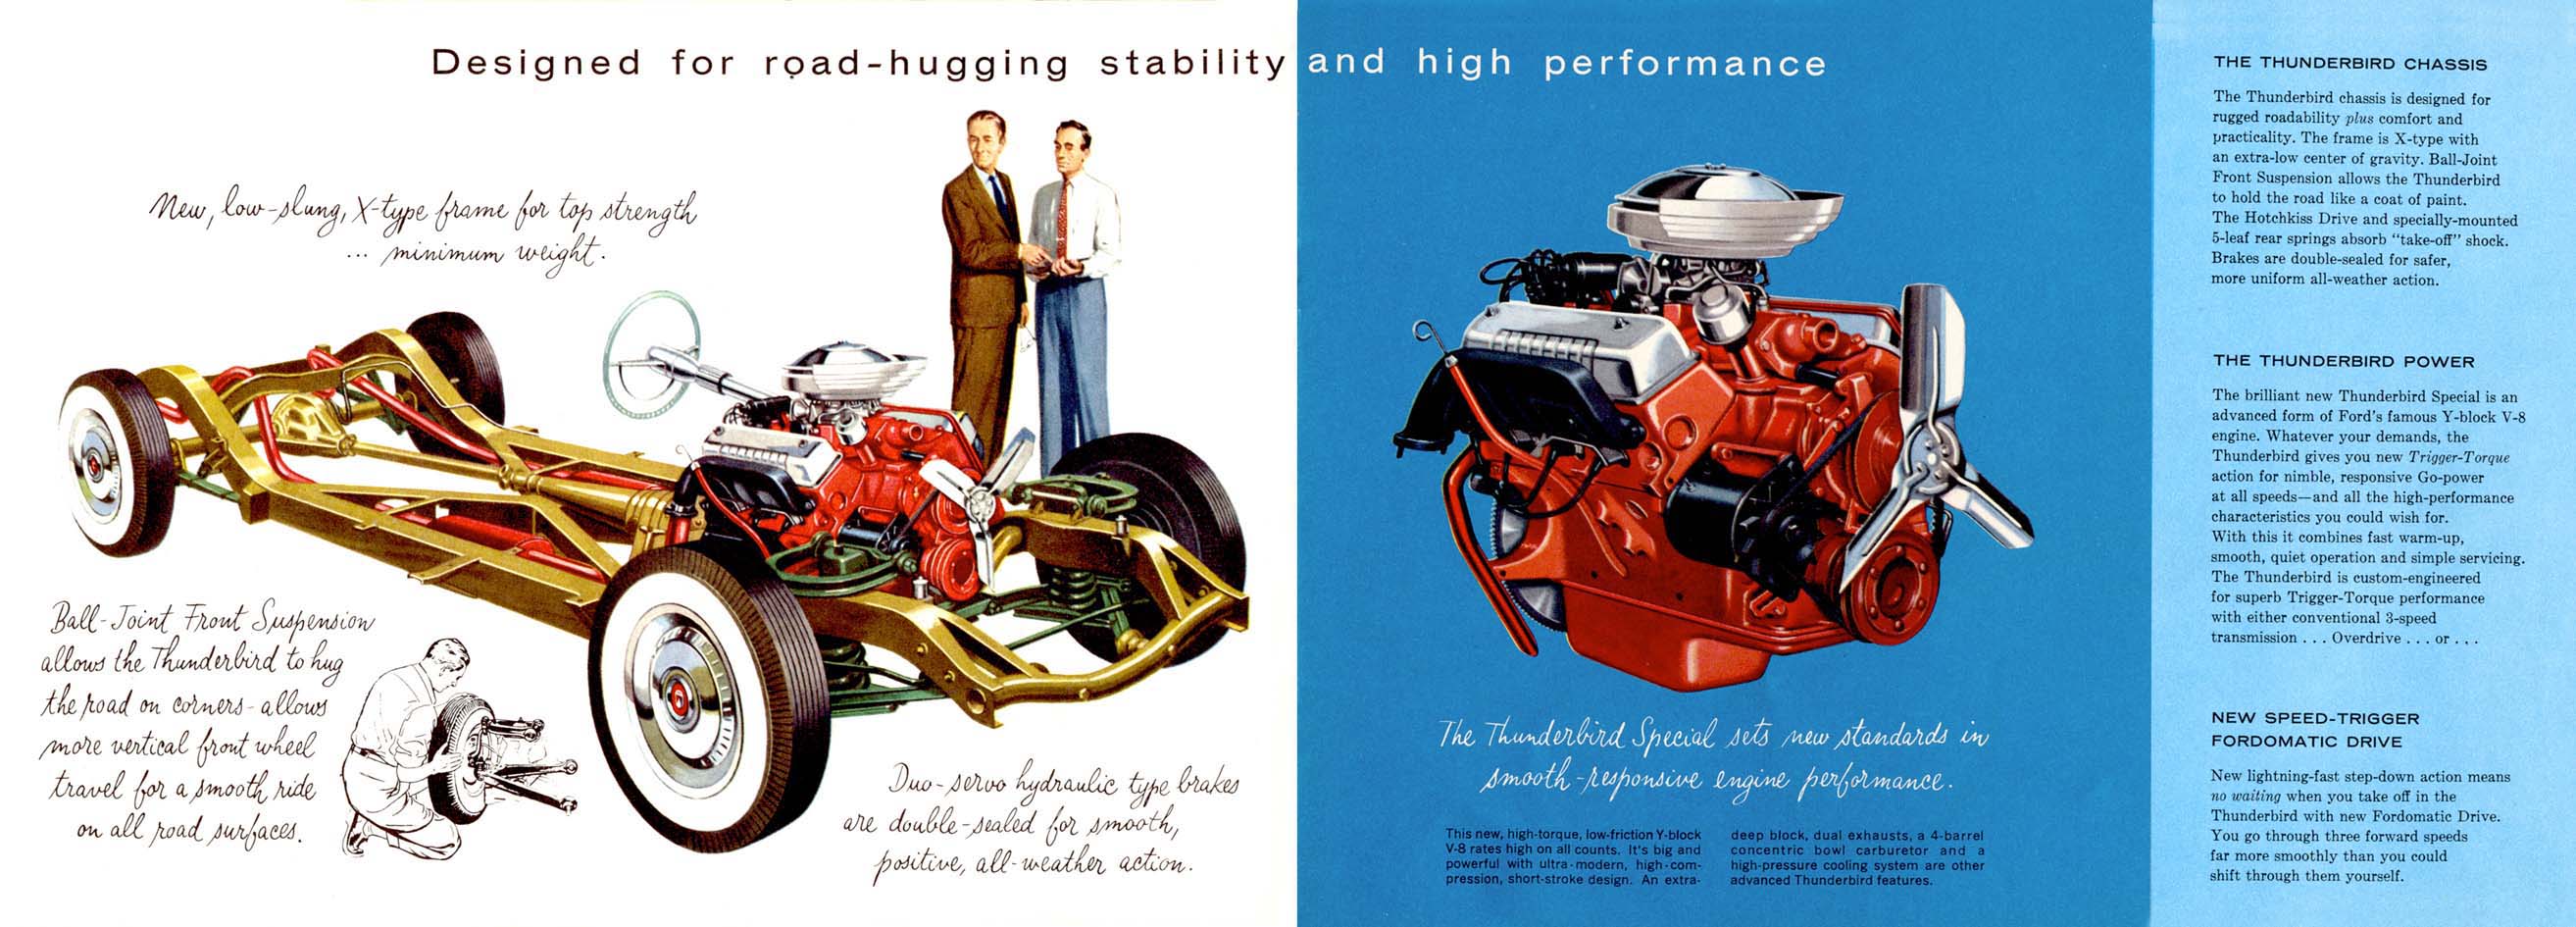 1955 Ford Thunderbird brochure